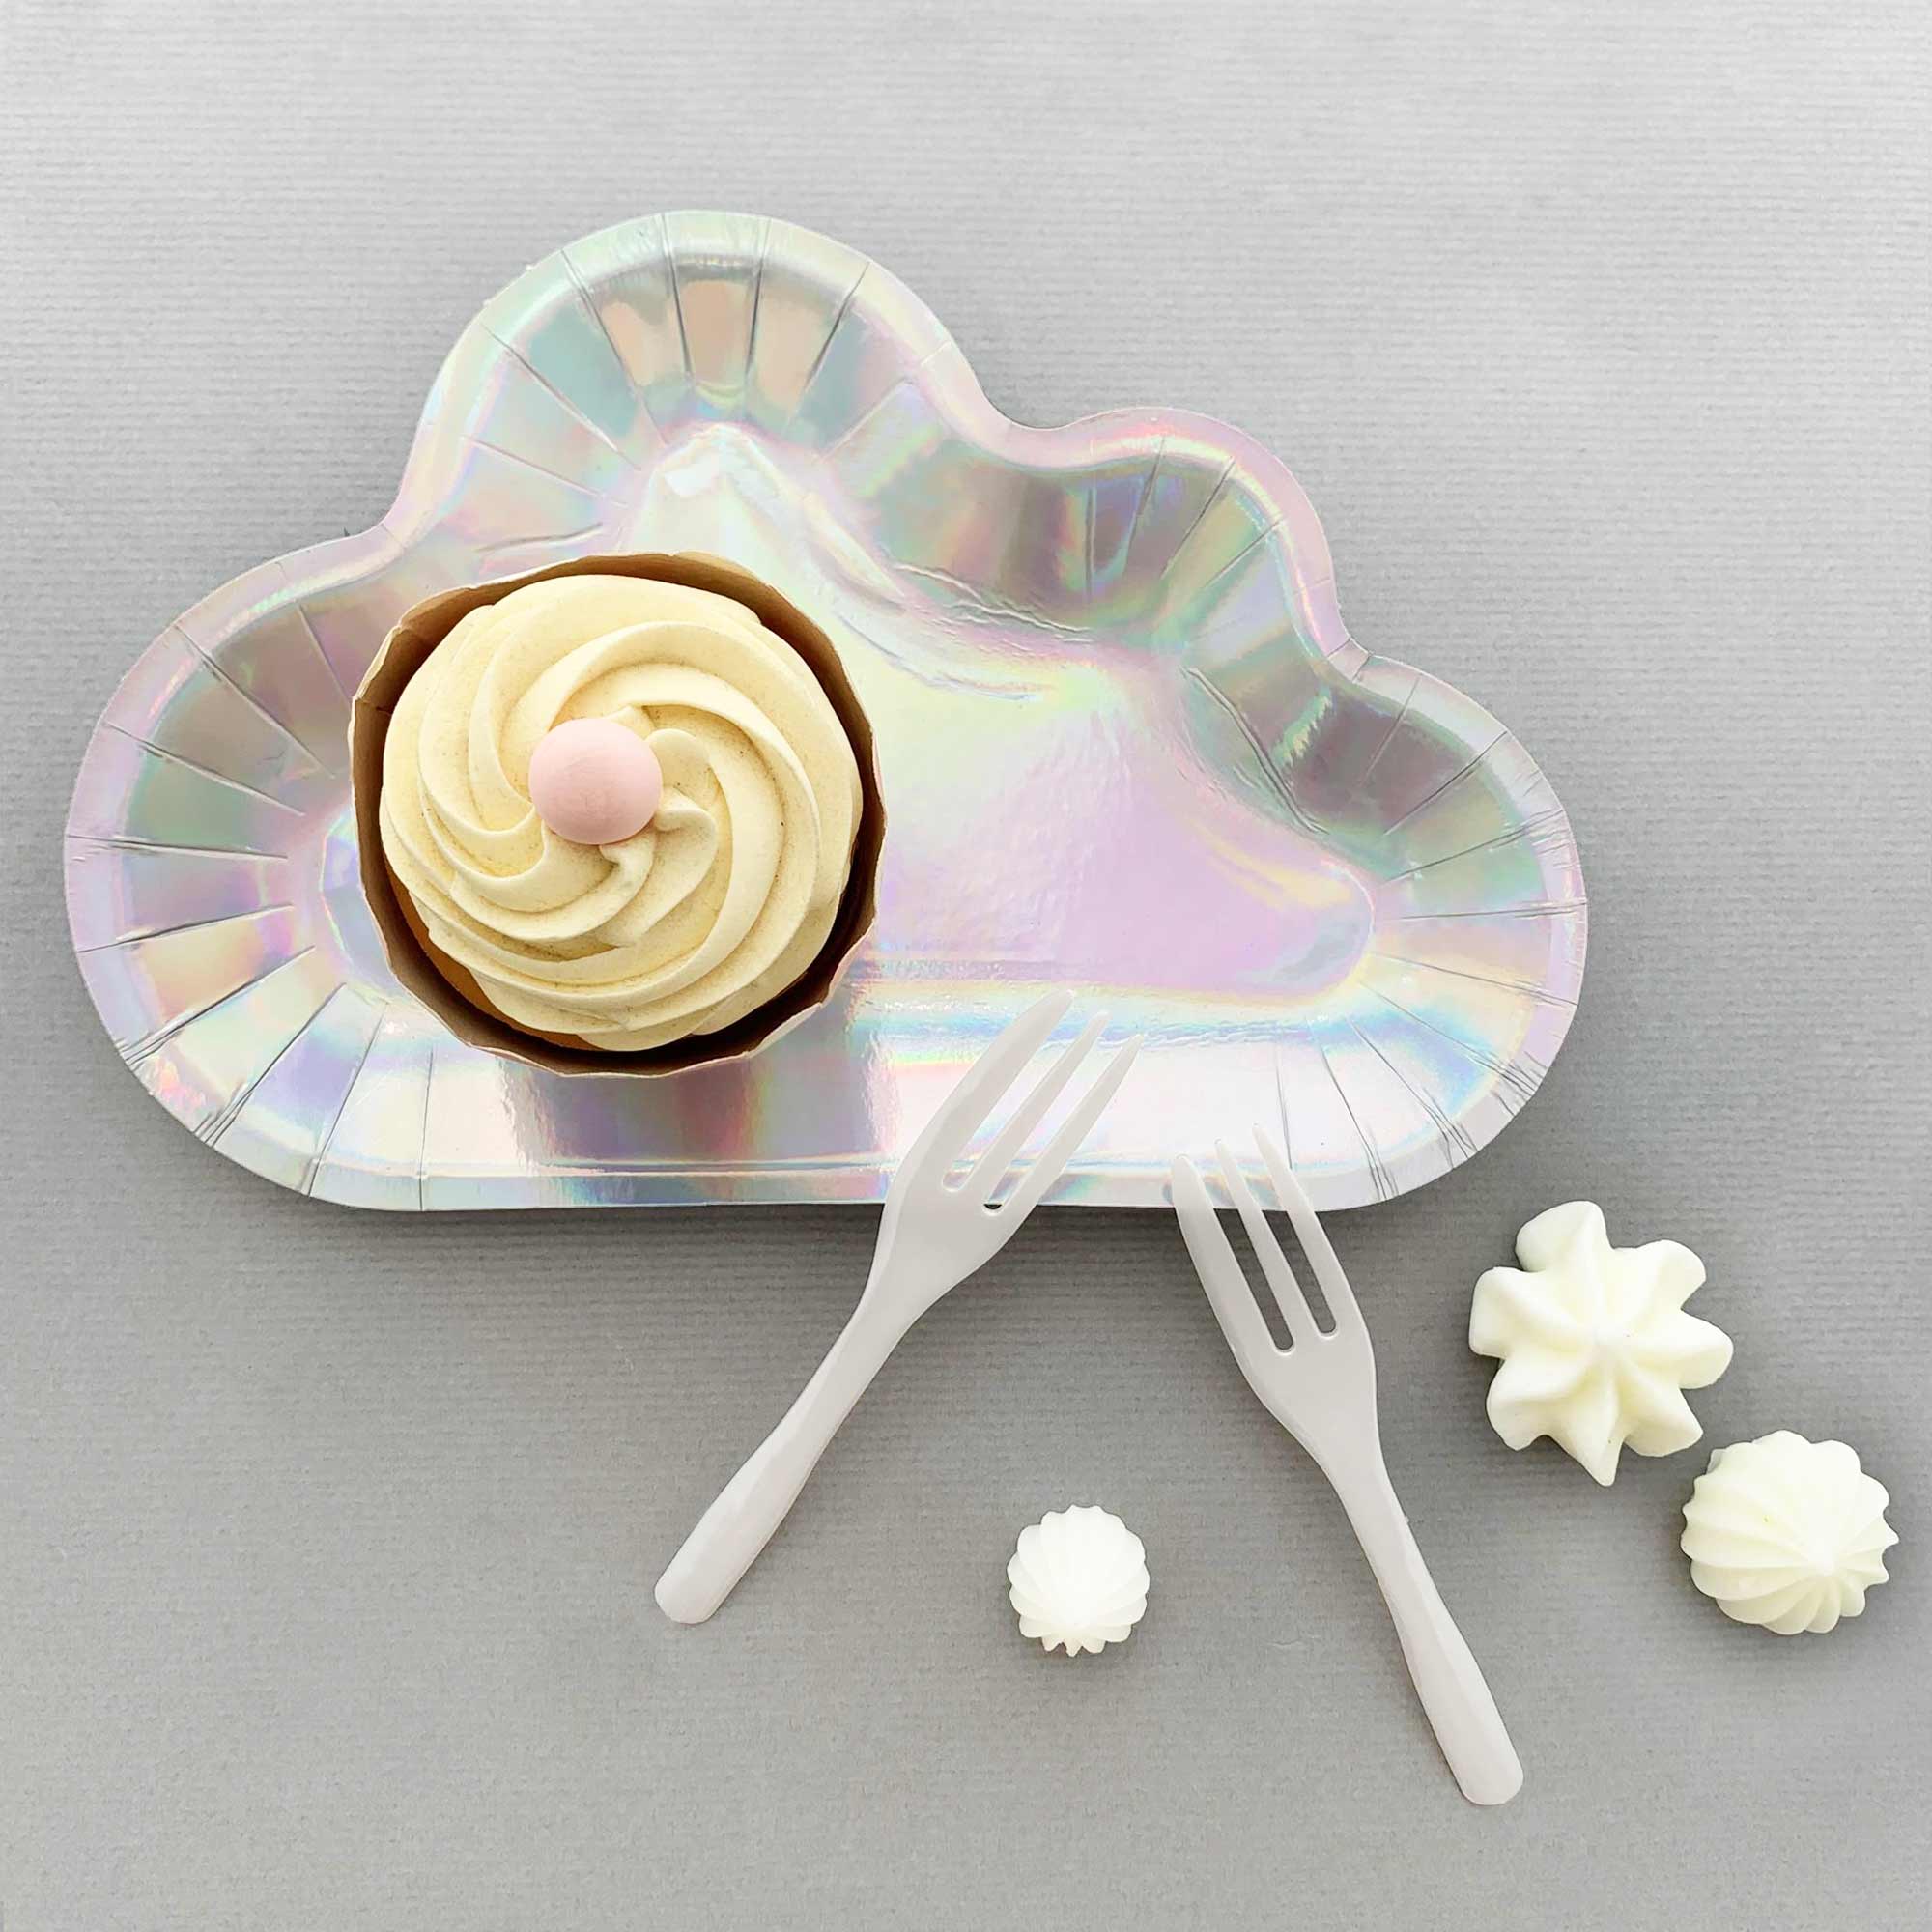 Set piring dan garpu kek berbentuk awan berkilauan adalah sempurna untuk parti ulang tahun bertema langit. Mencerahkan meja makan anda dengan piring awan yang berkilauan dan tambahkan sentuhan sinar kepada perayaan anda!